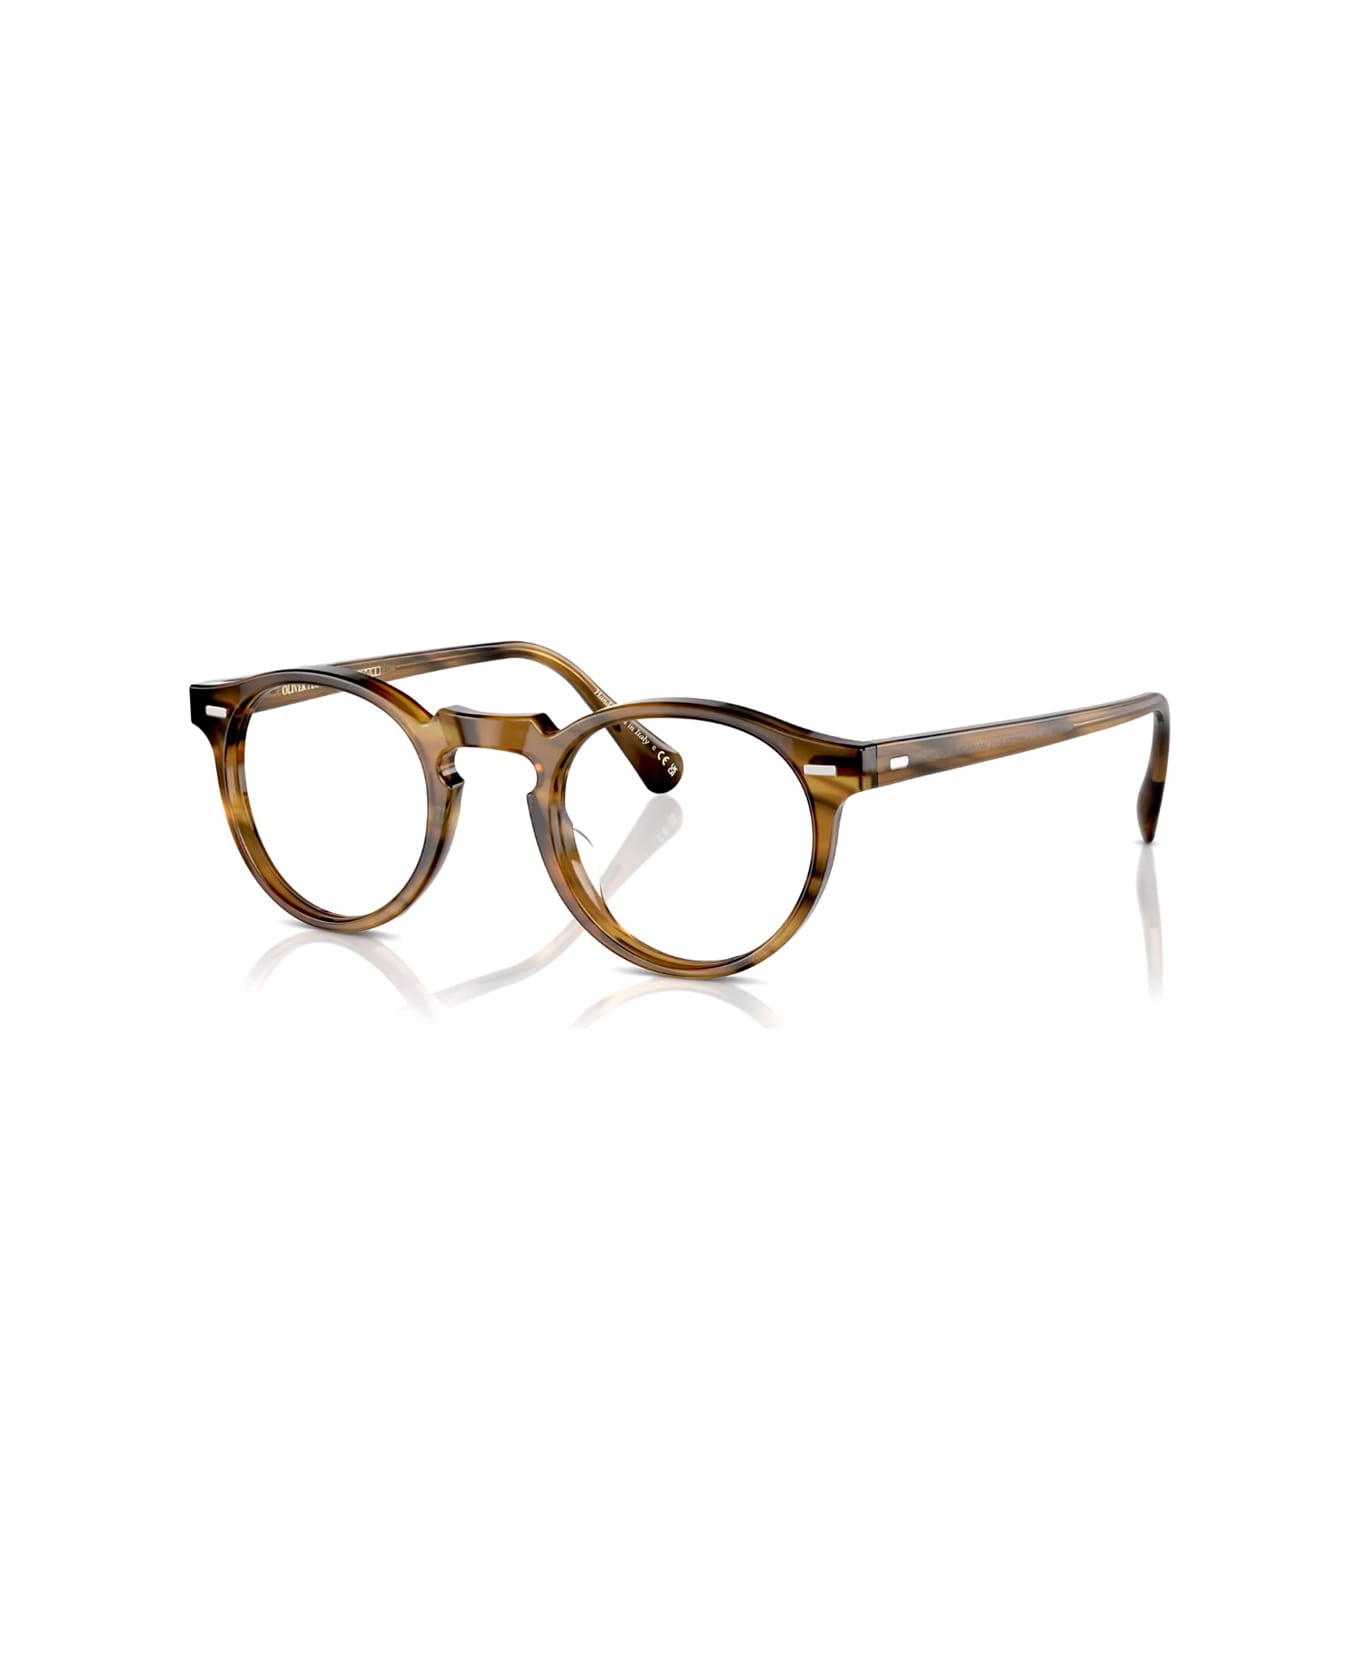 Oliver Peoples Ov5186 - Gregory Peck 1011 Glasses - Marrone